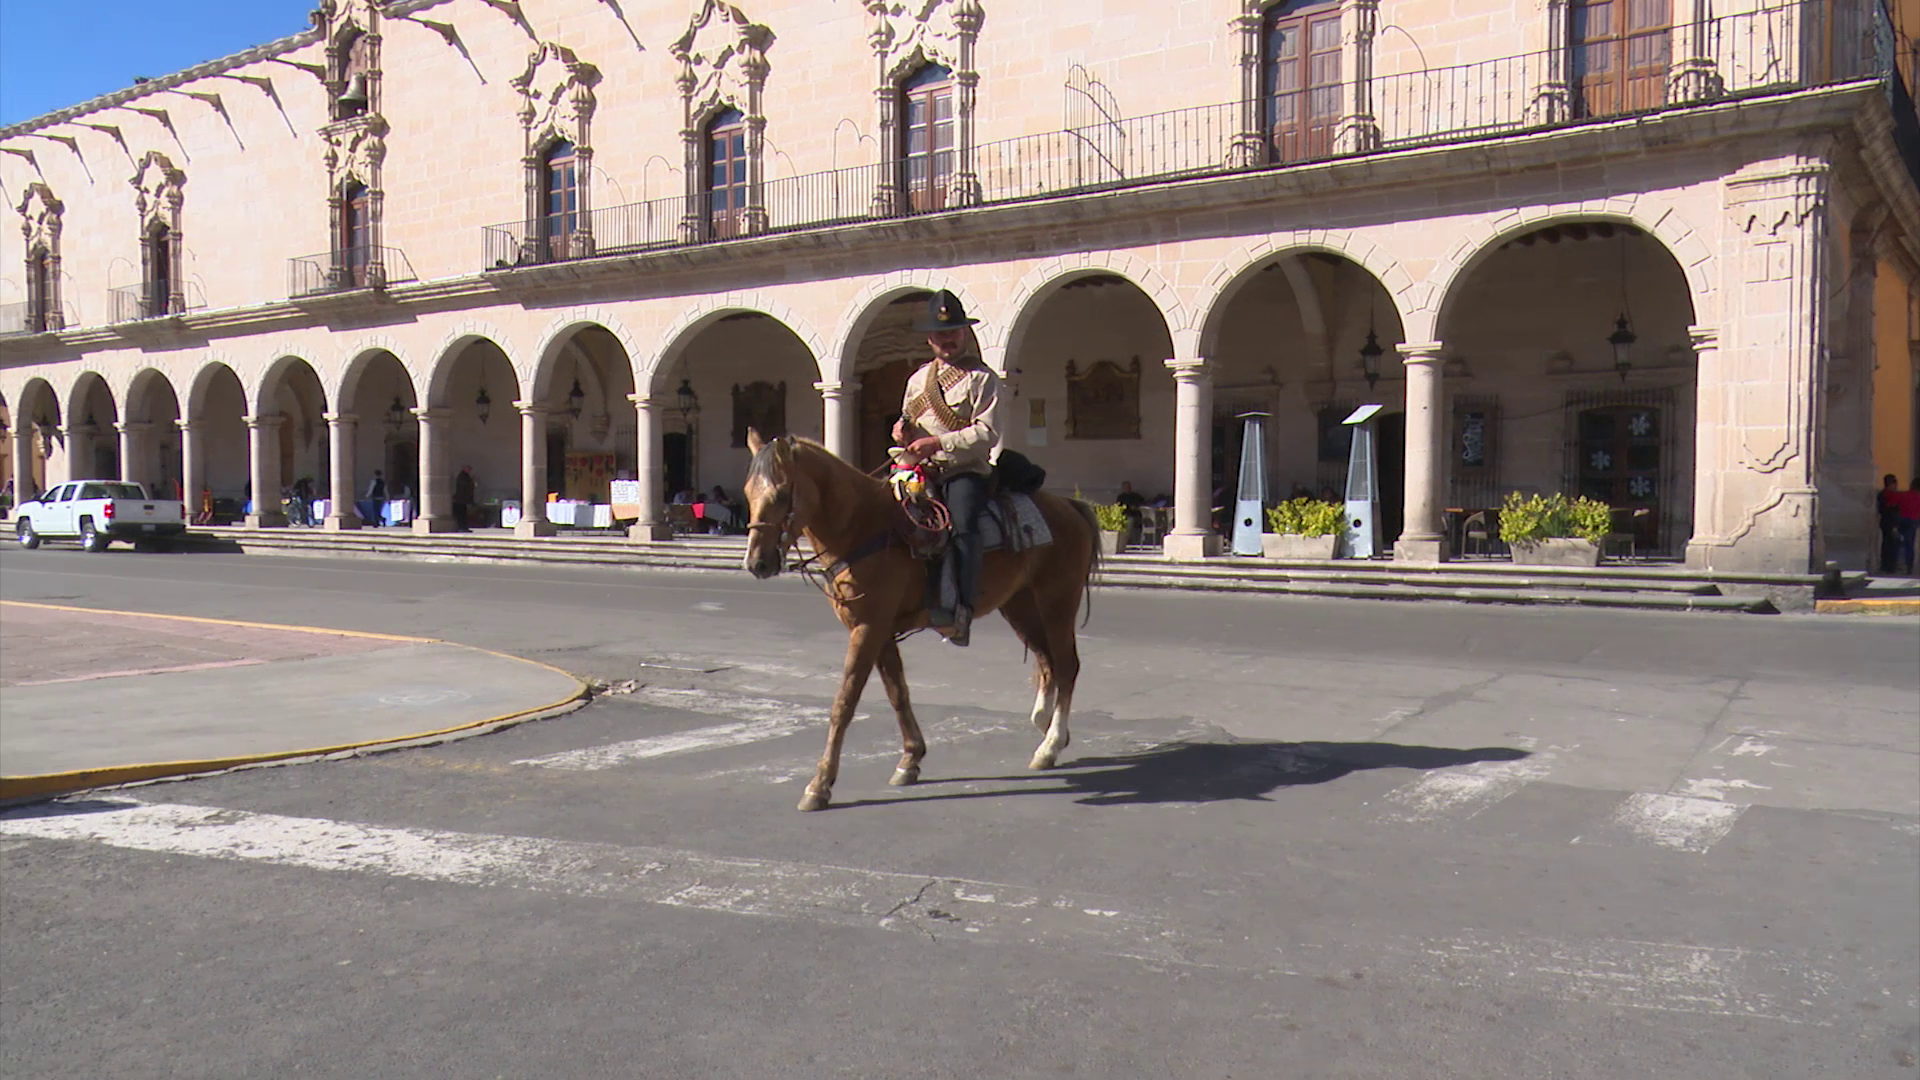 "Vive" en Durango Pancho Villa | Turismo | Noticias | TVP ...